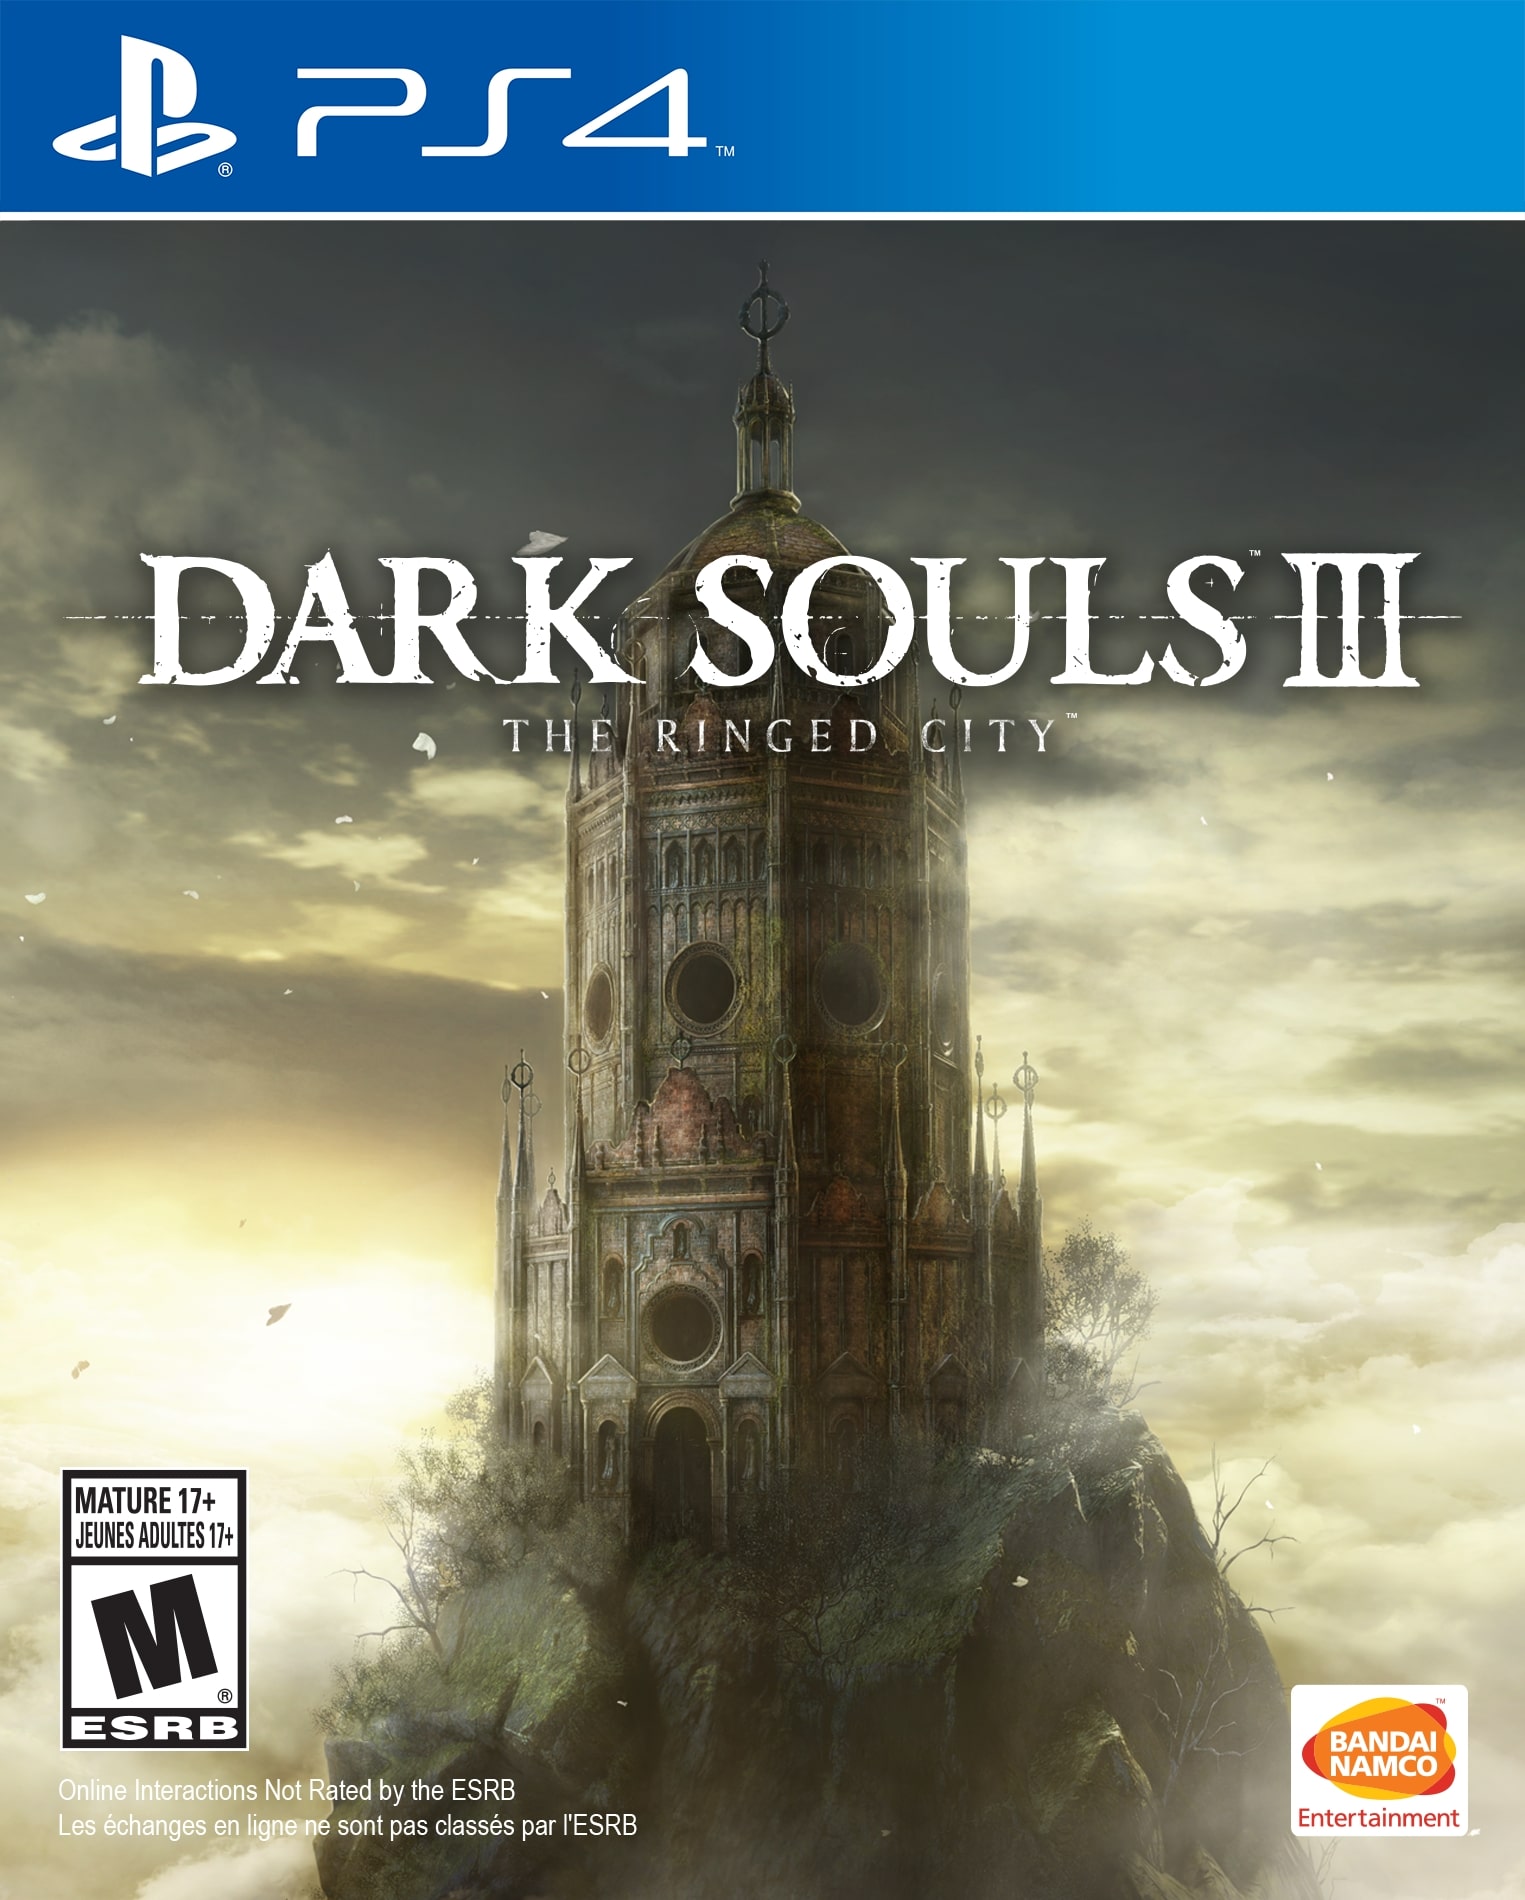 Dark Souls III The Ringed City PS4 Boxart